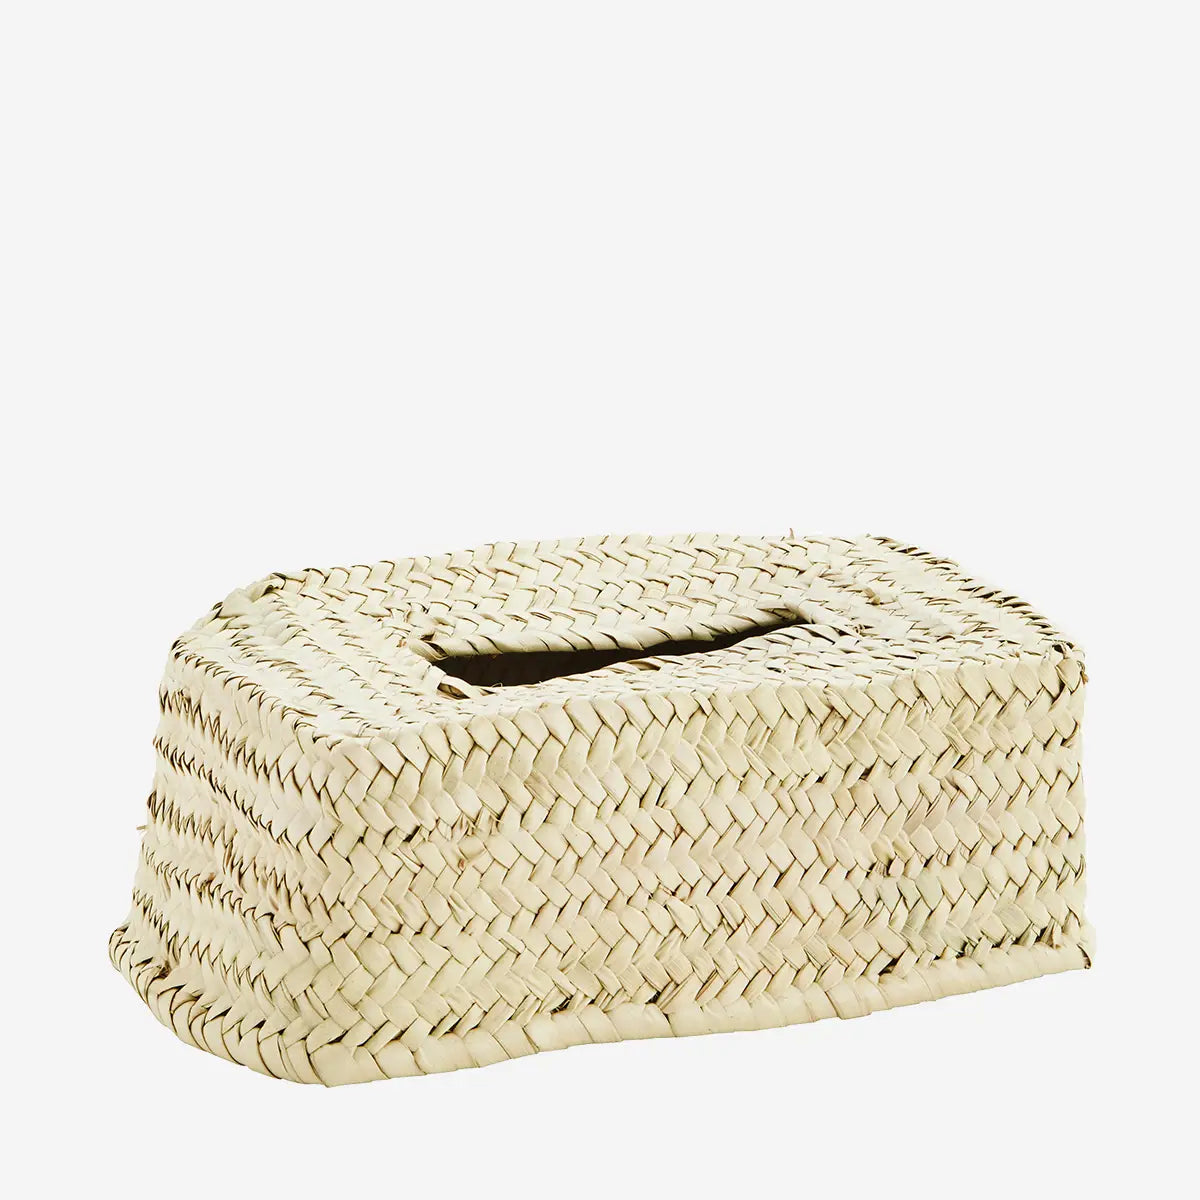 Grass tissue box